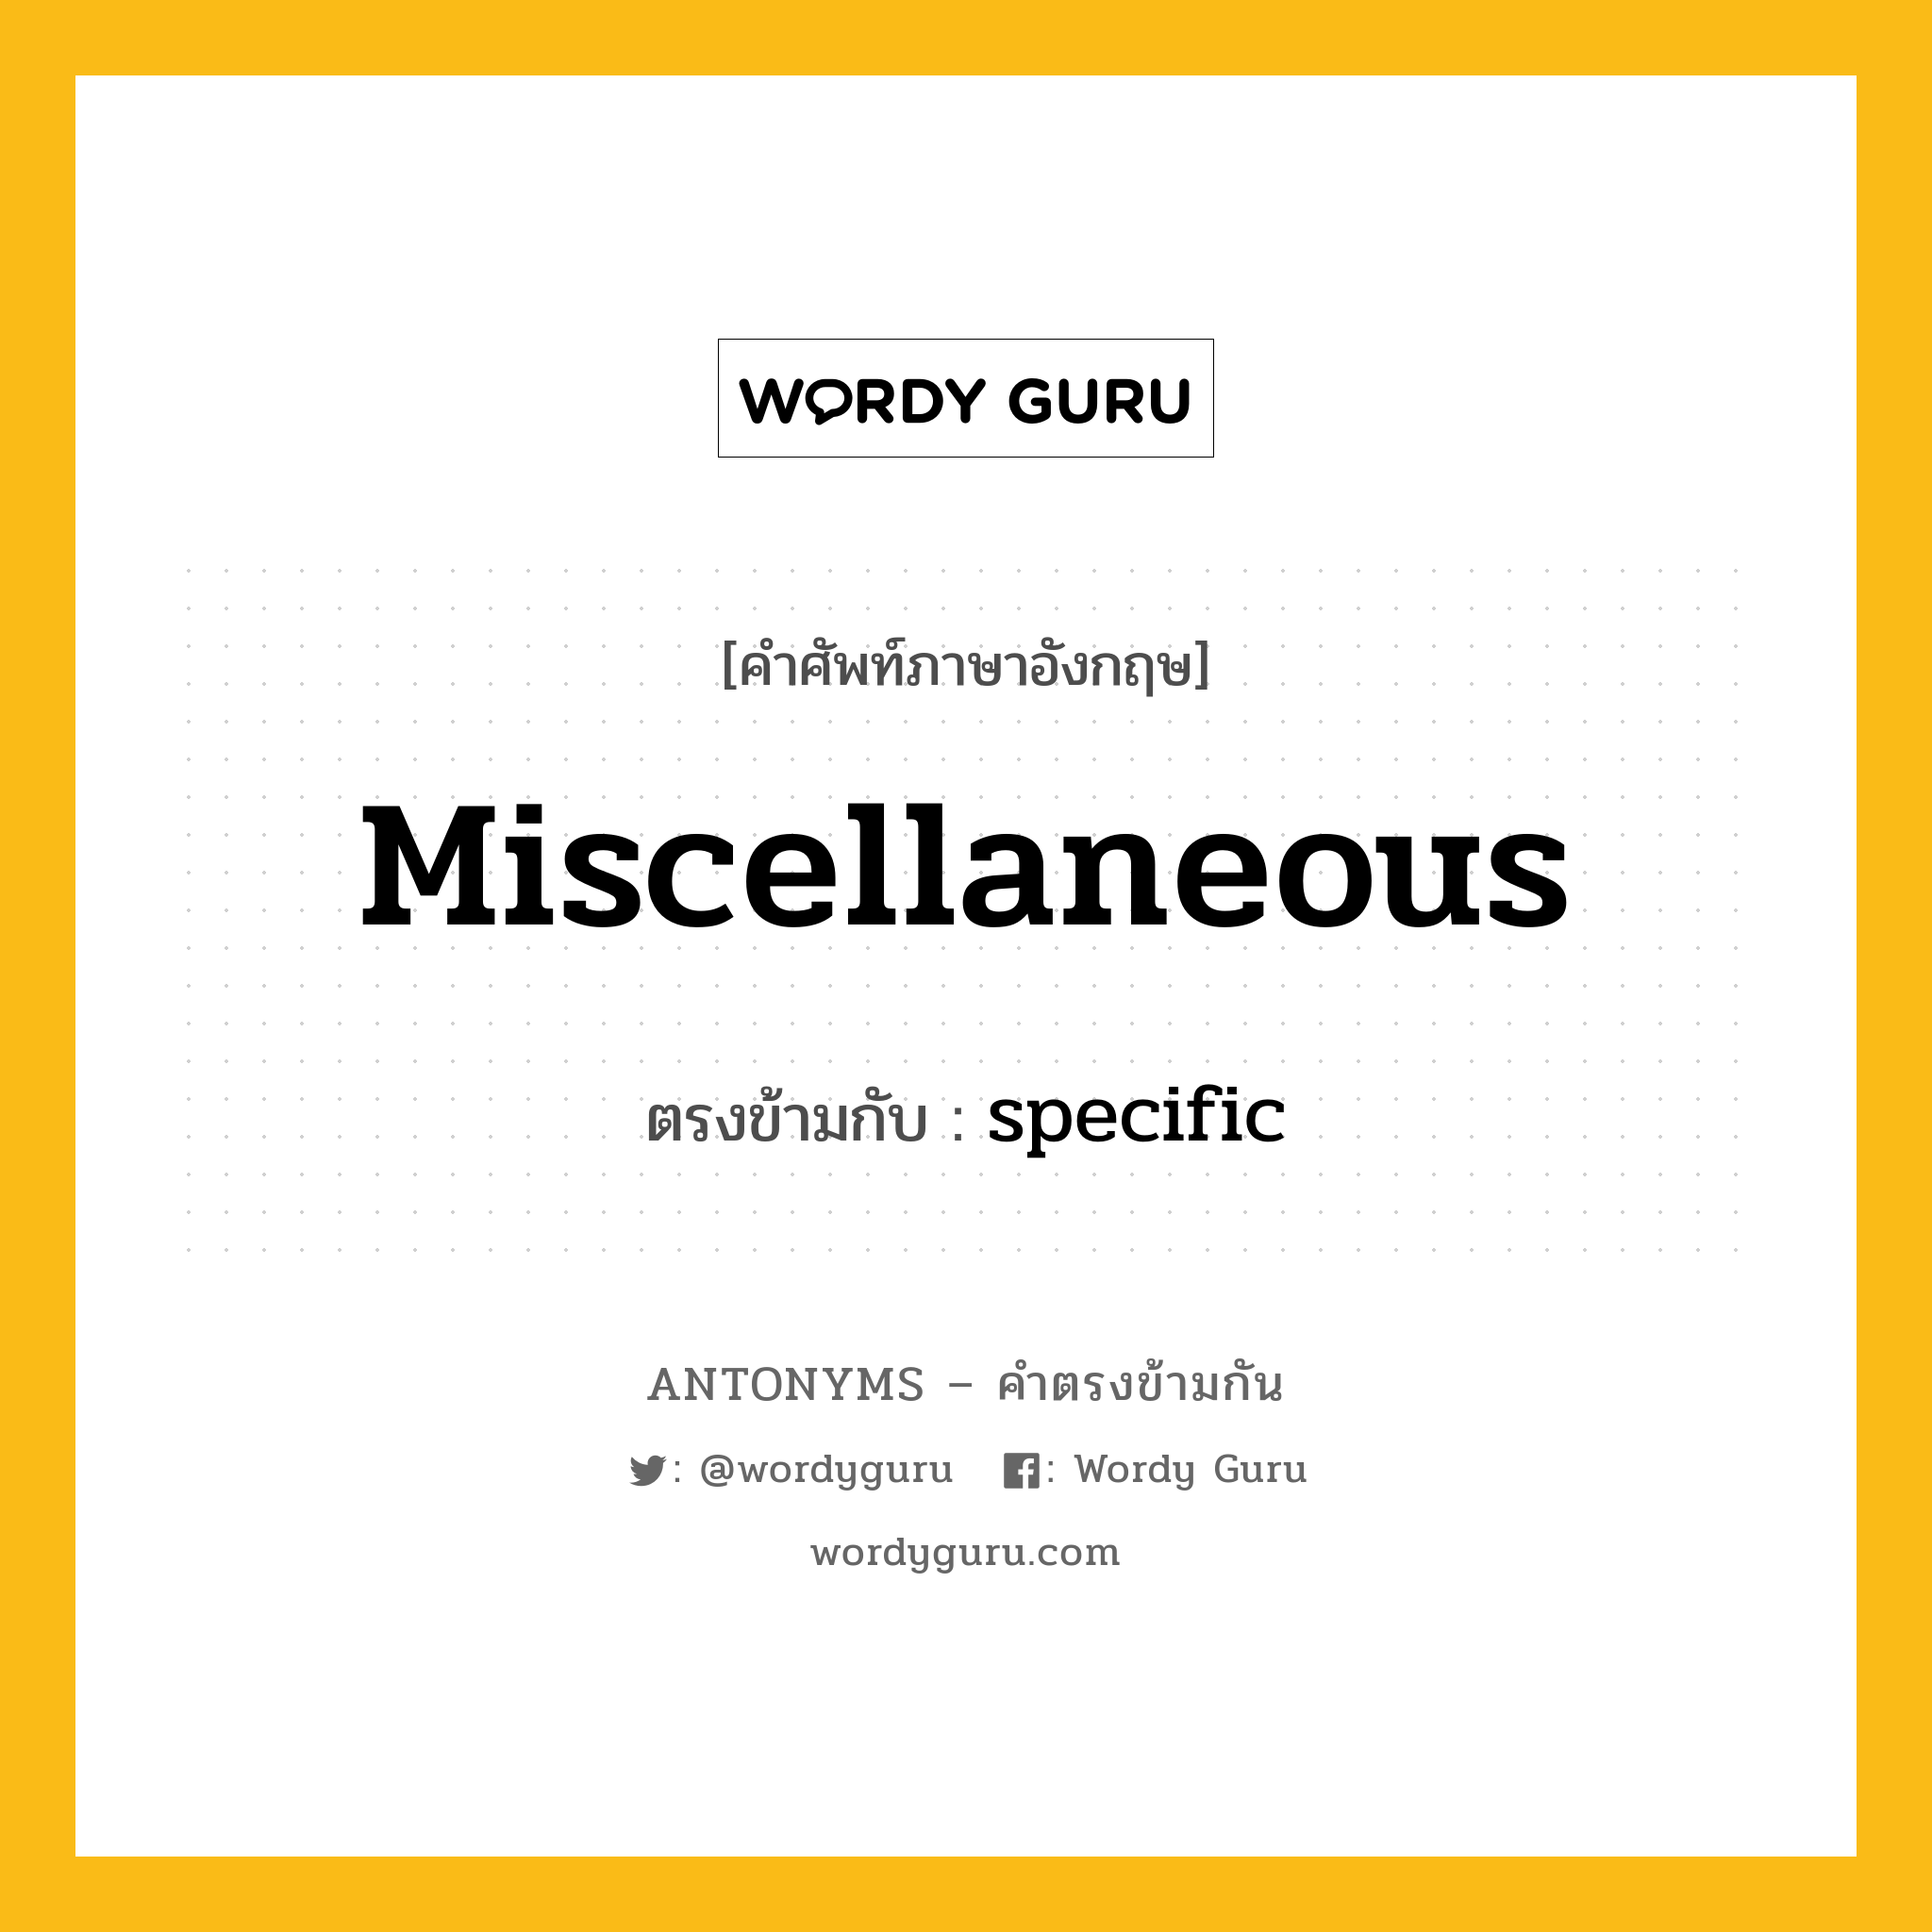 miscellaneous เป็นคำตรงข้ามกับคำไหนบ้าง?, คำศัพท์ภาษาอังกฤษ miscellaneous ตรงข้ามกับ specific หมวด specific